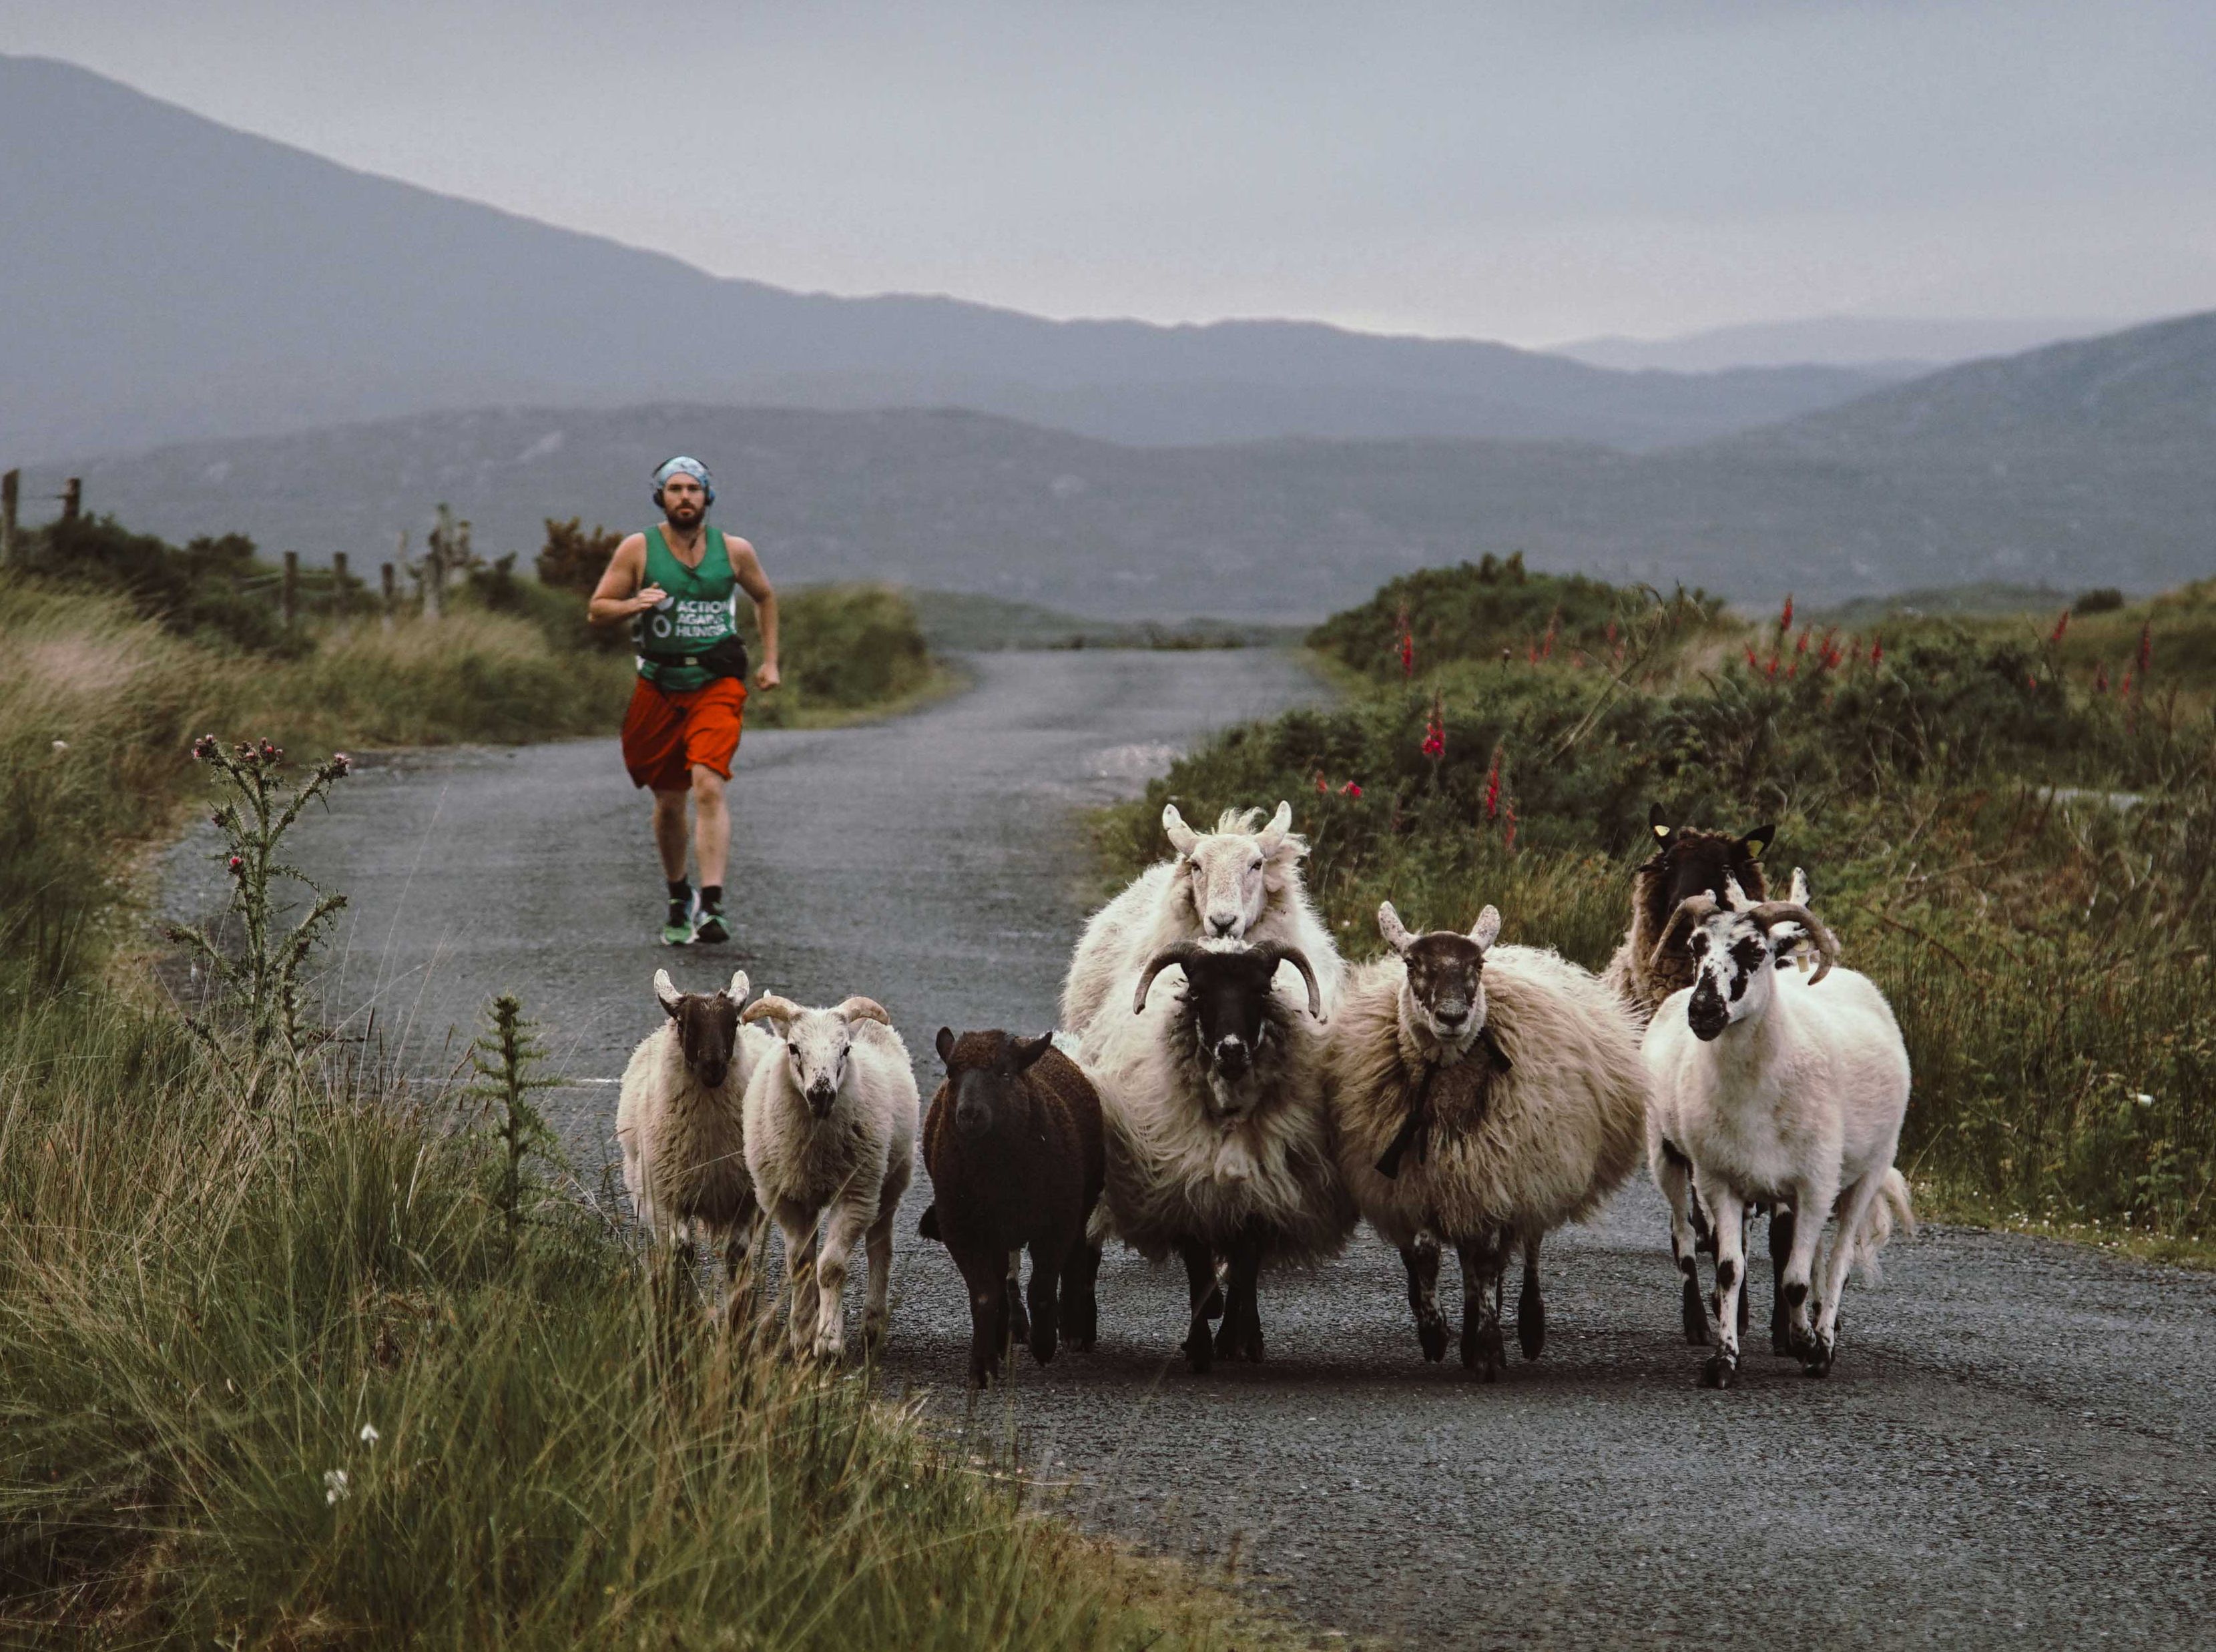 David Paul Cook running 10 Marathons in 10 Days behind sheep.